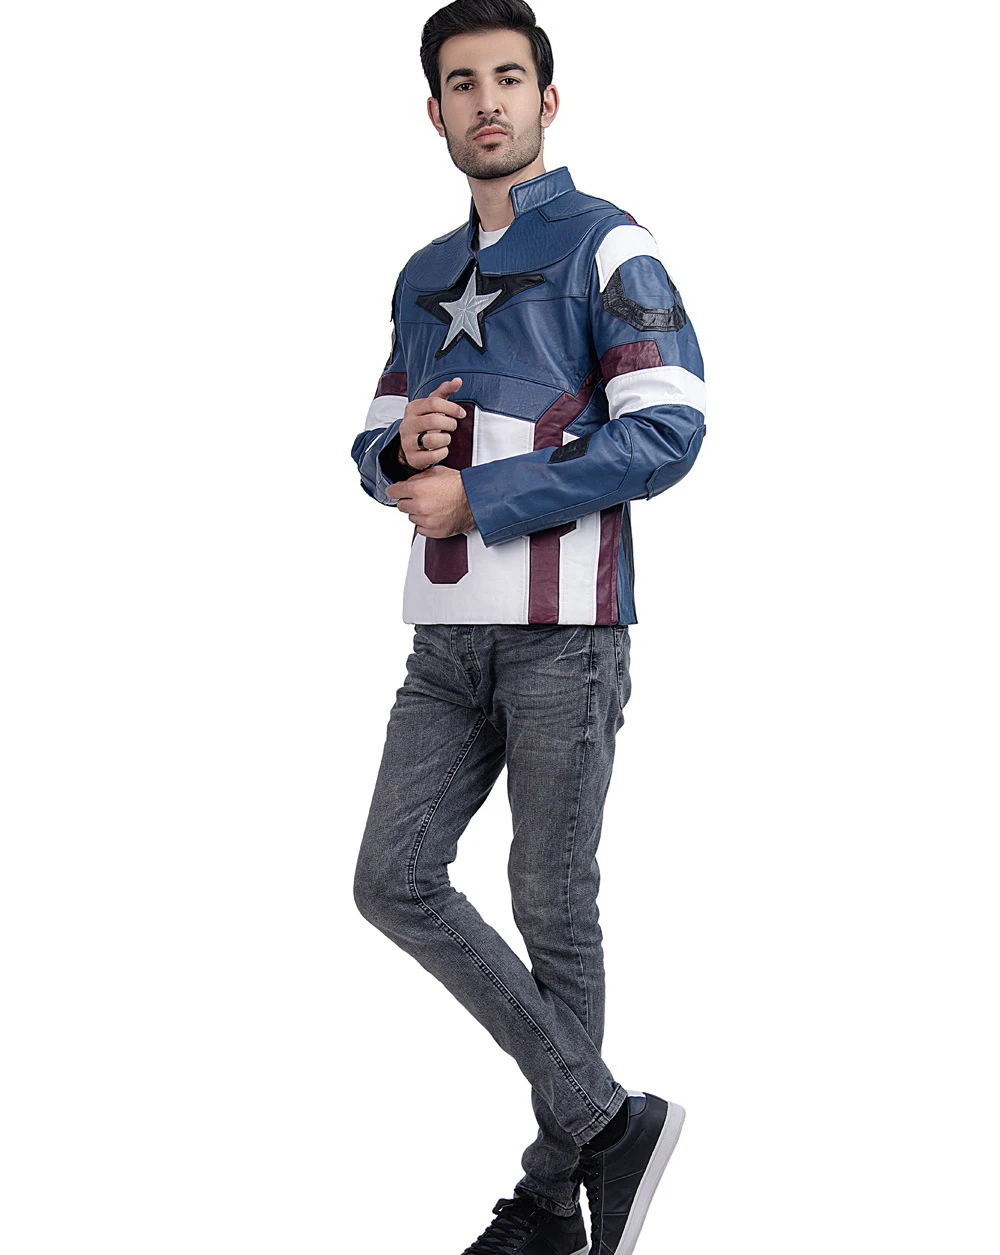 Avengers-2018 Captain America Jacket